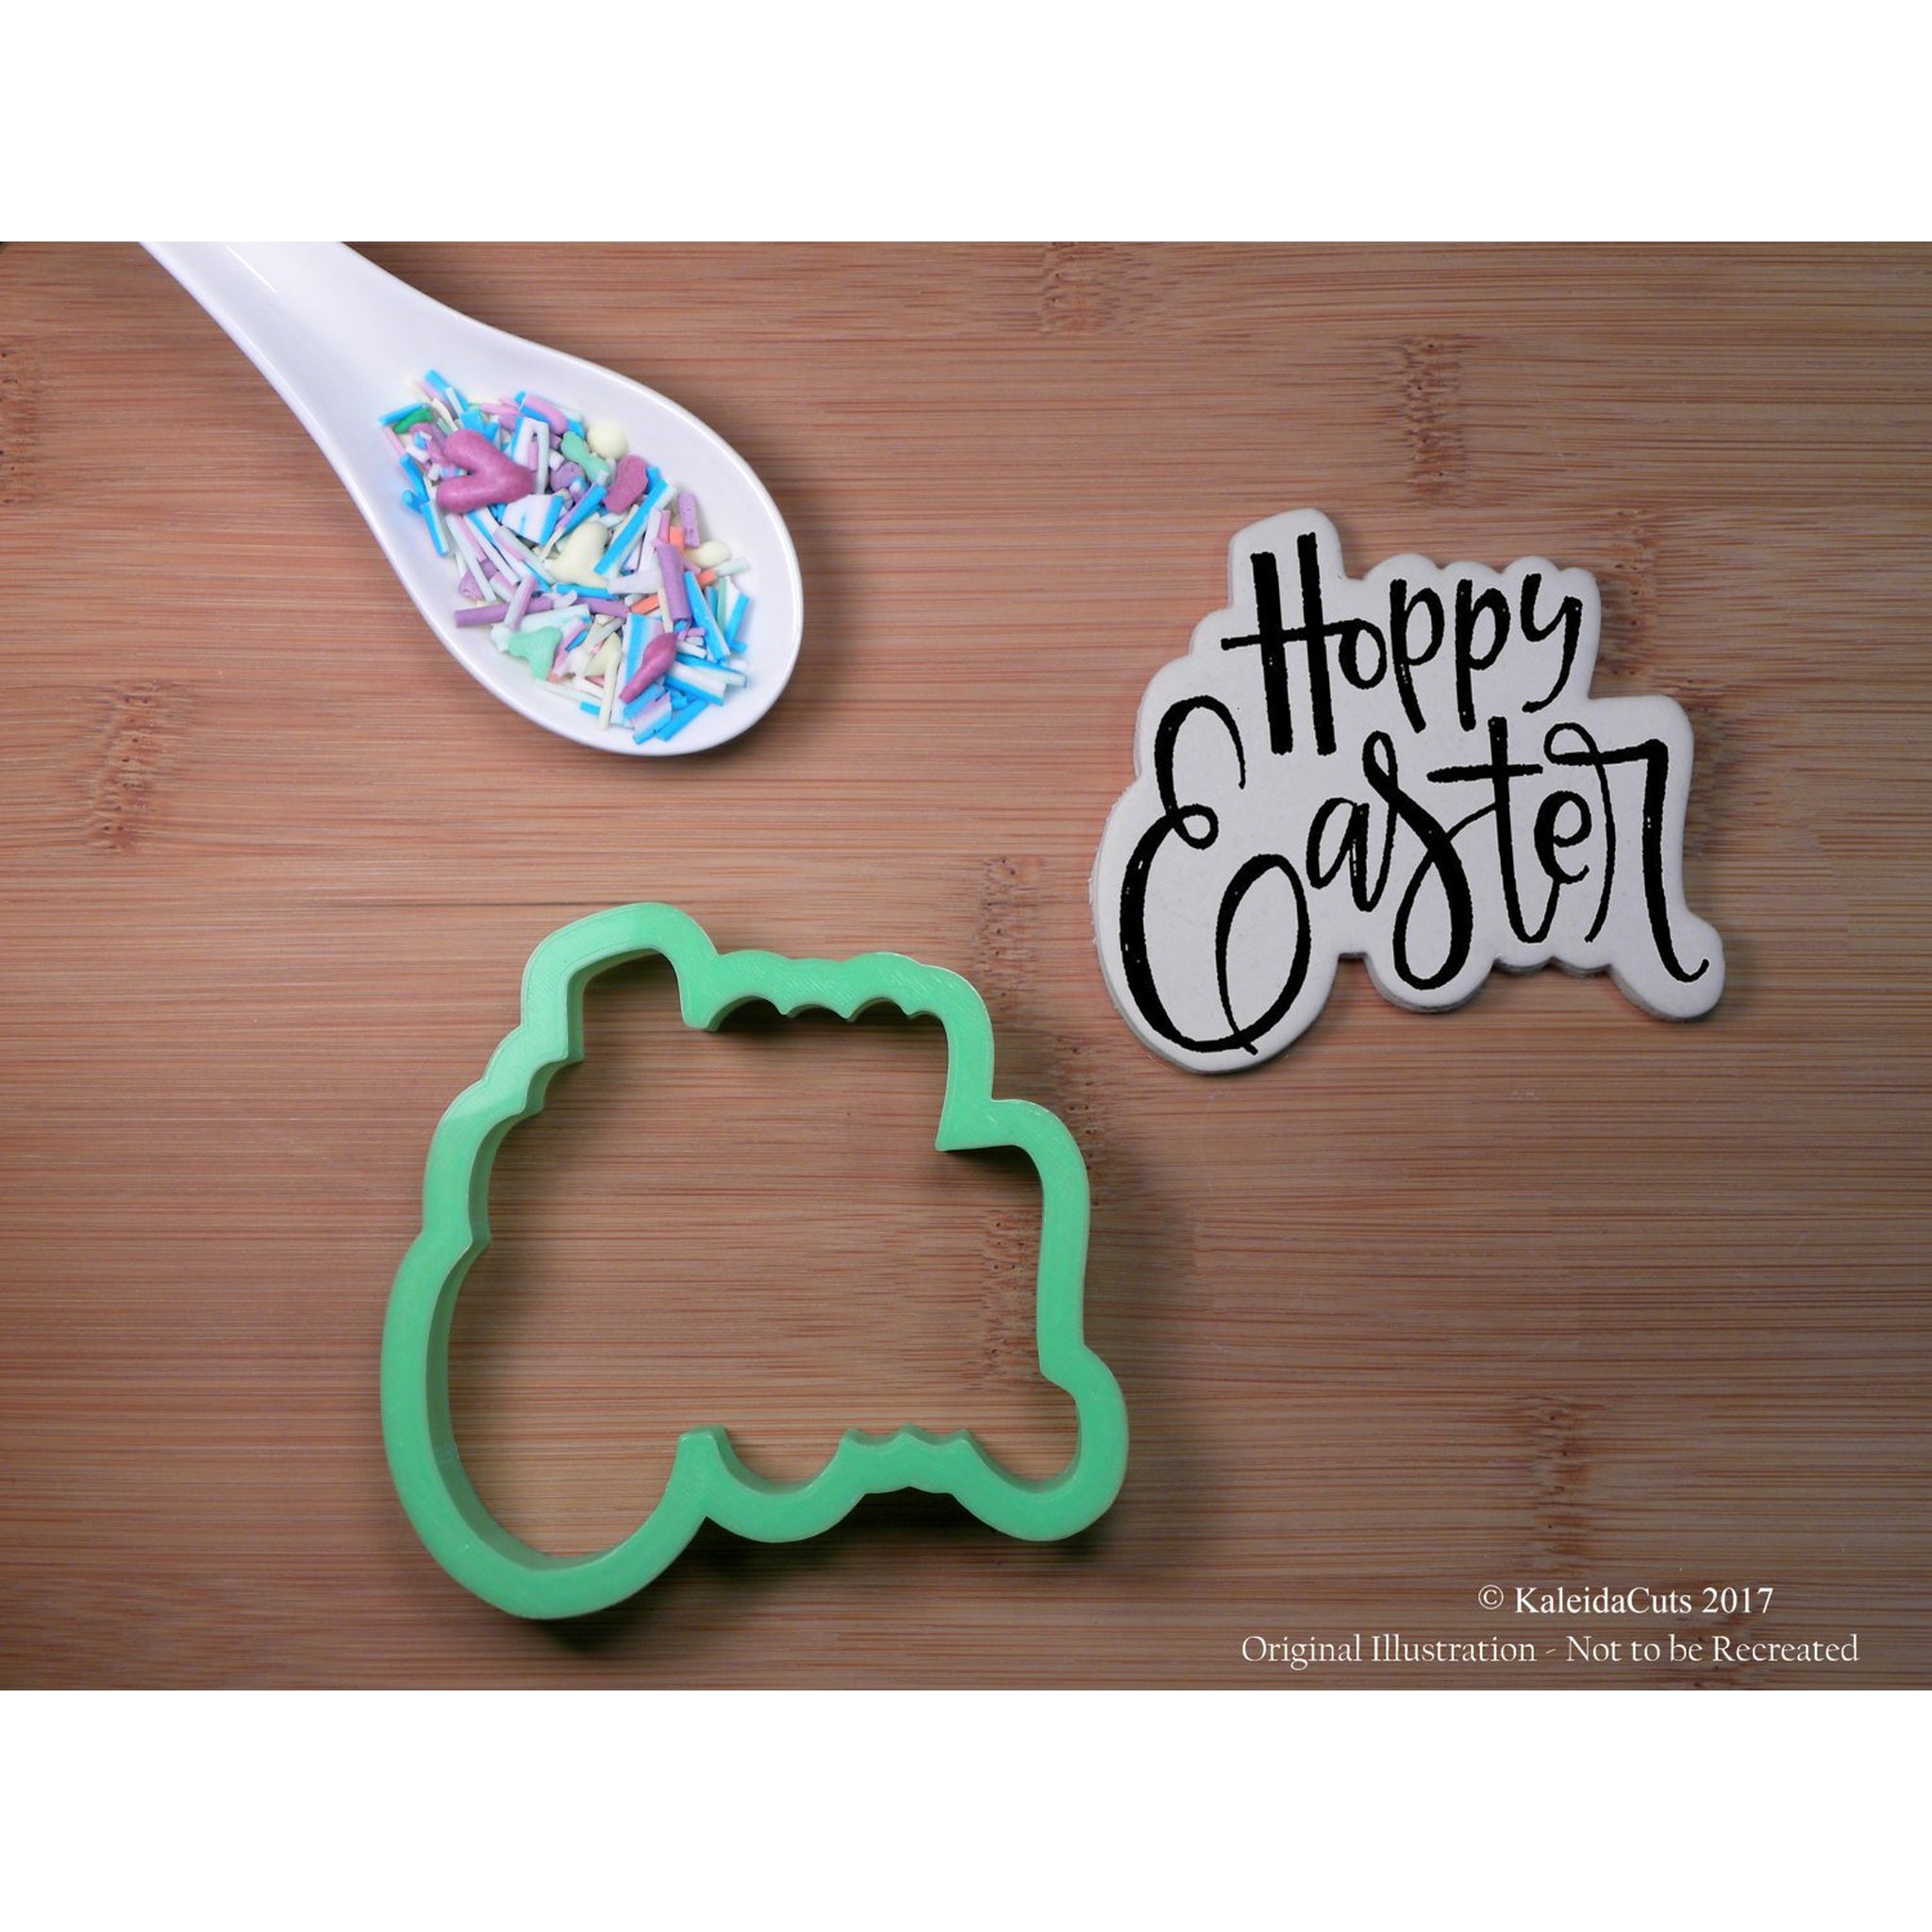 Hoppy Easter Cookie Cutter - KaleidaCuts